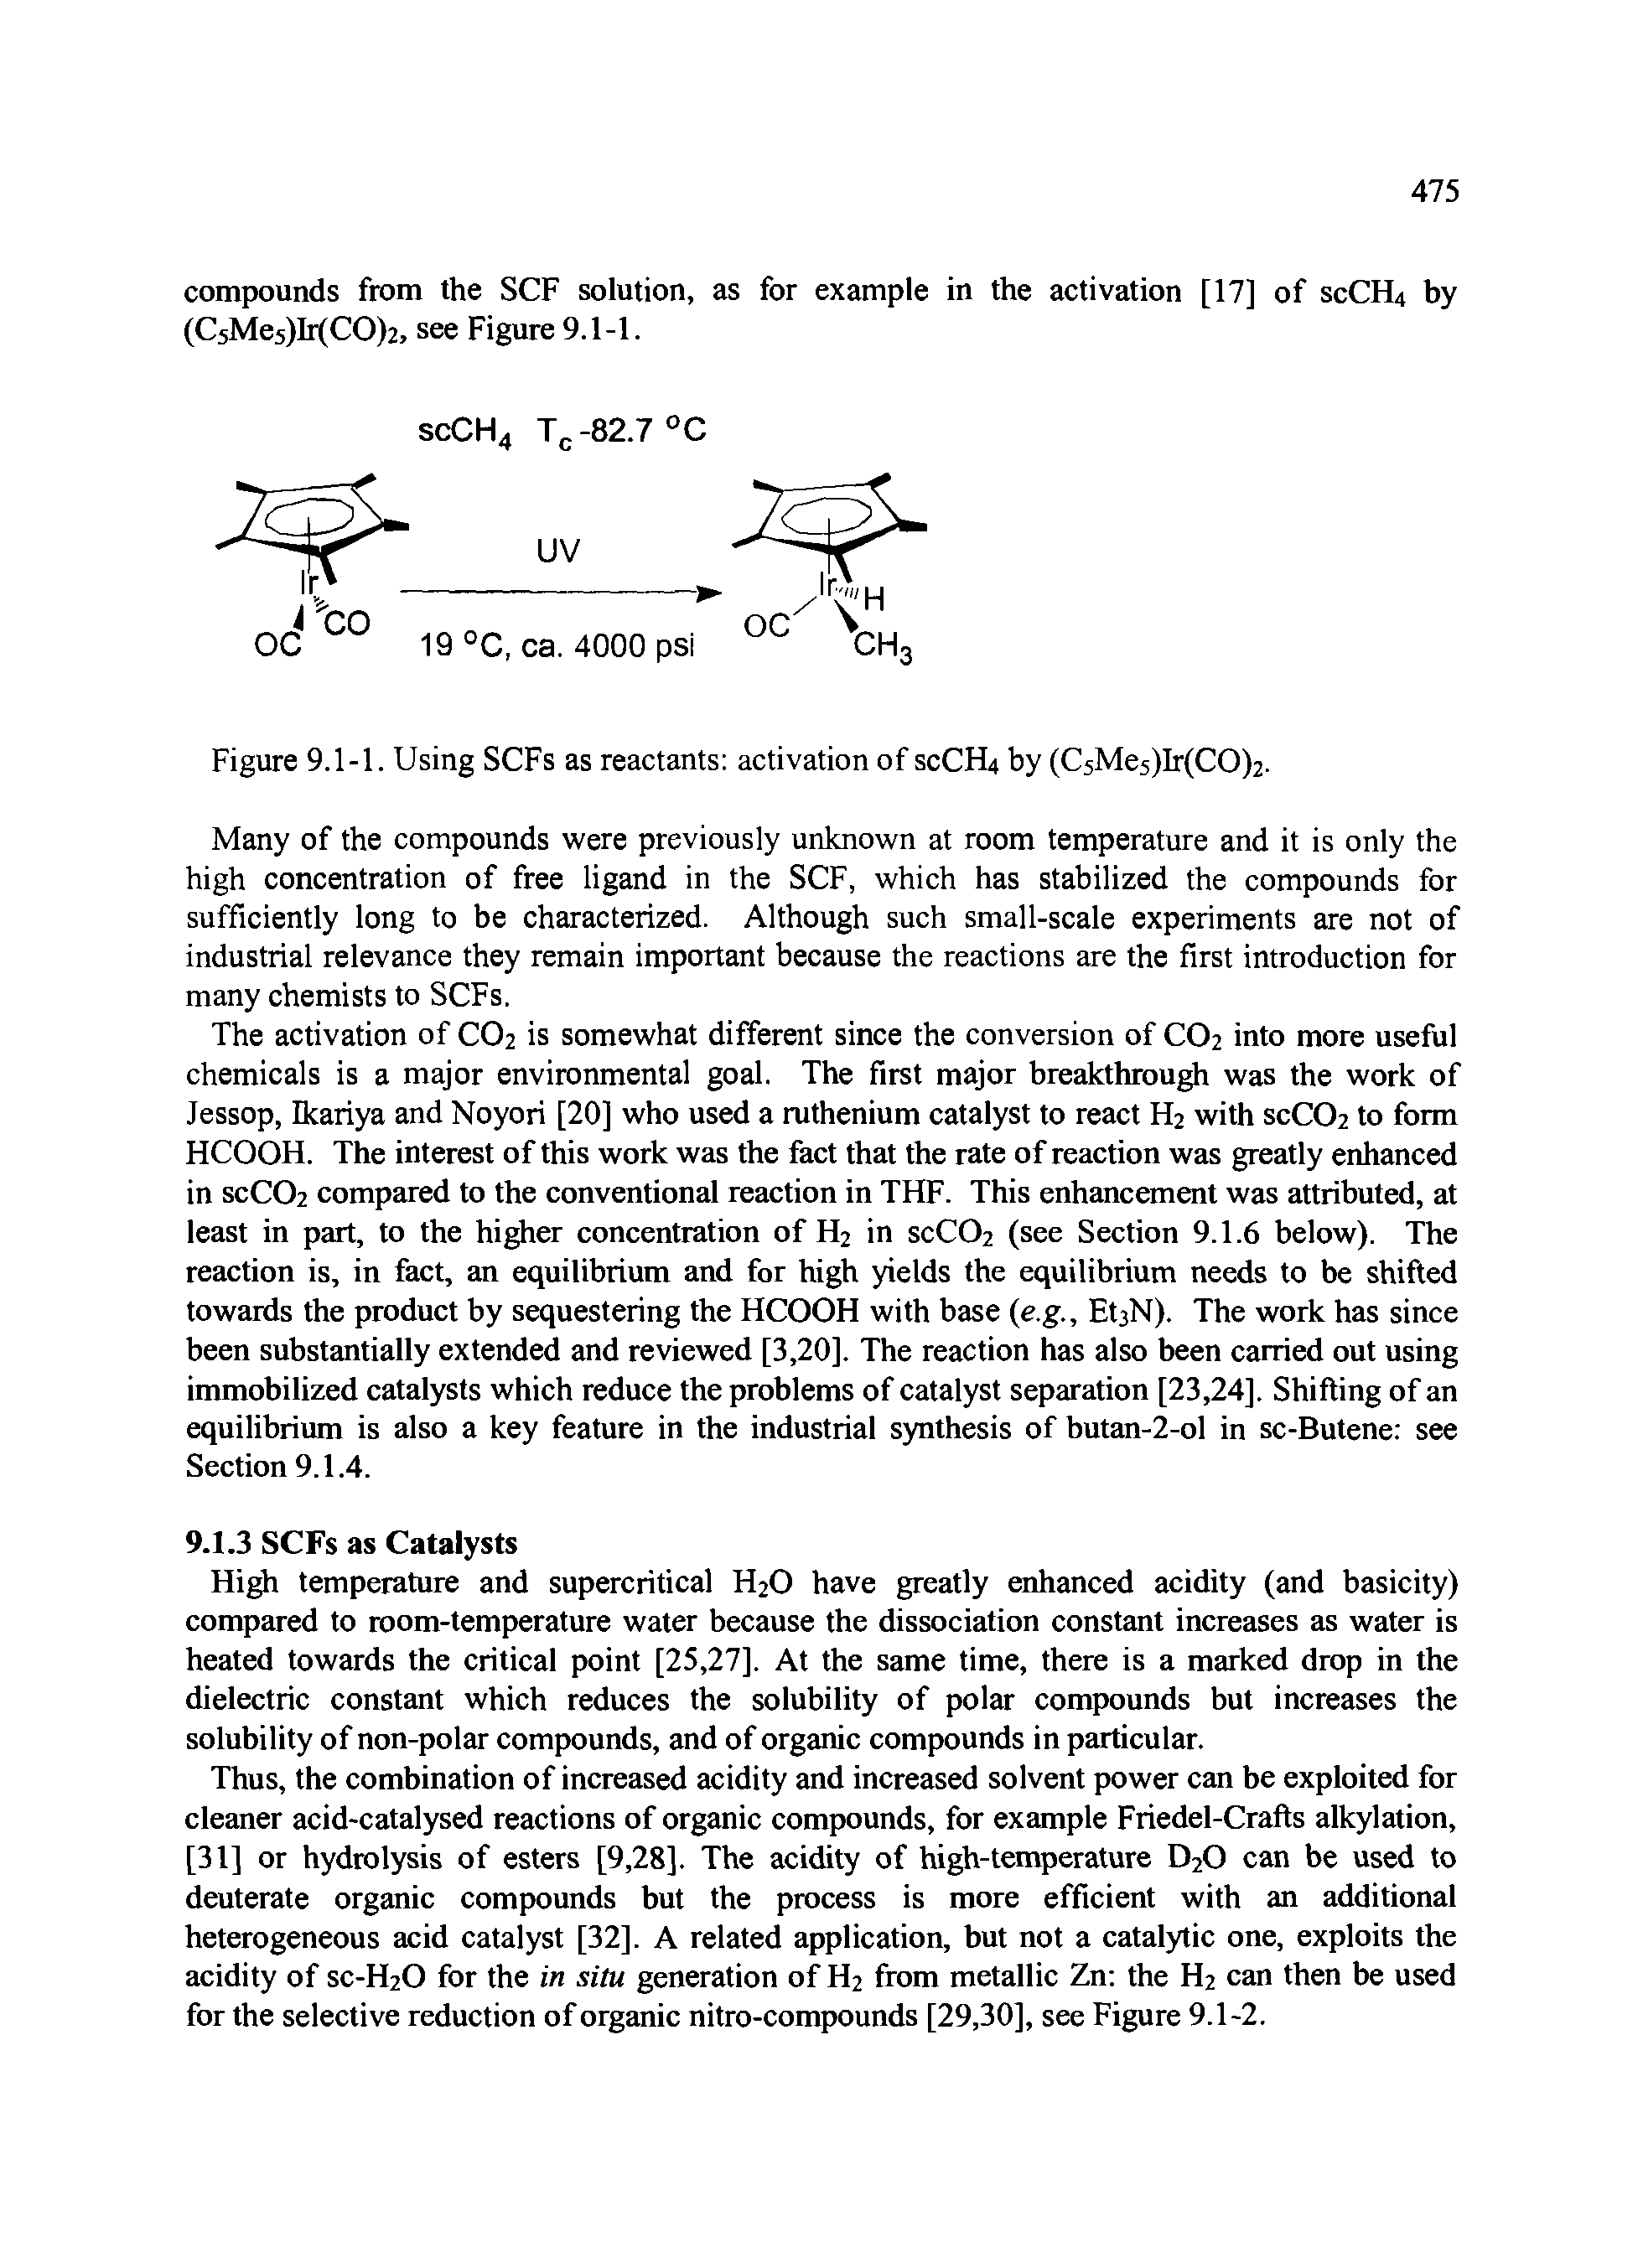 Figure 9.1-1. Using SCFs as reactants activation of scCH4 by (C5Me5)Ir(CO)2-...